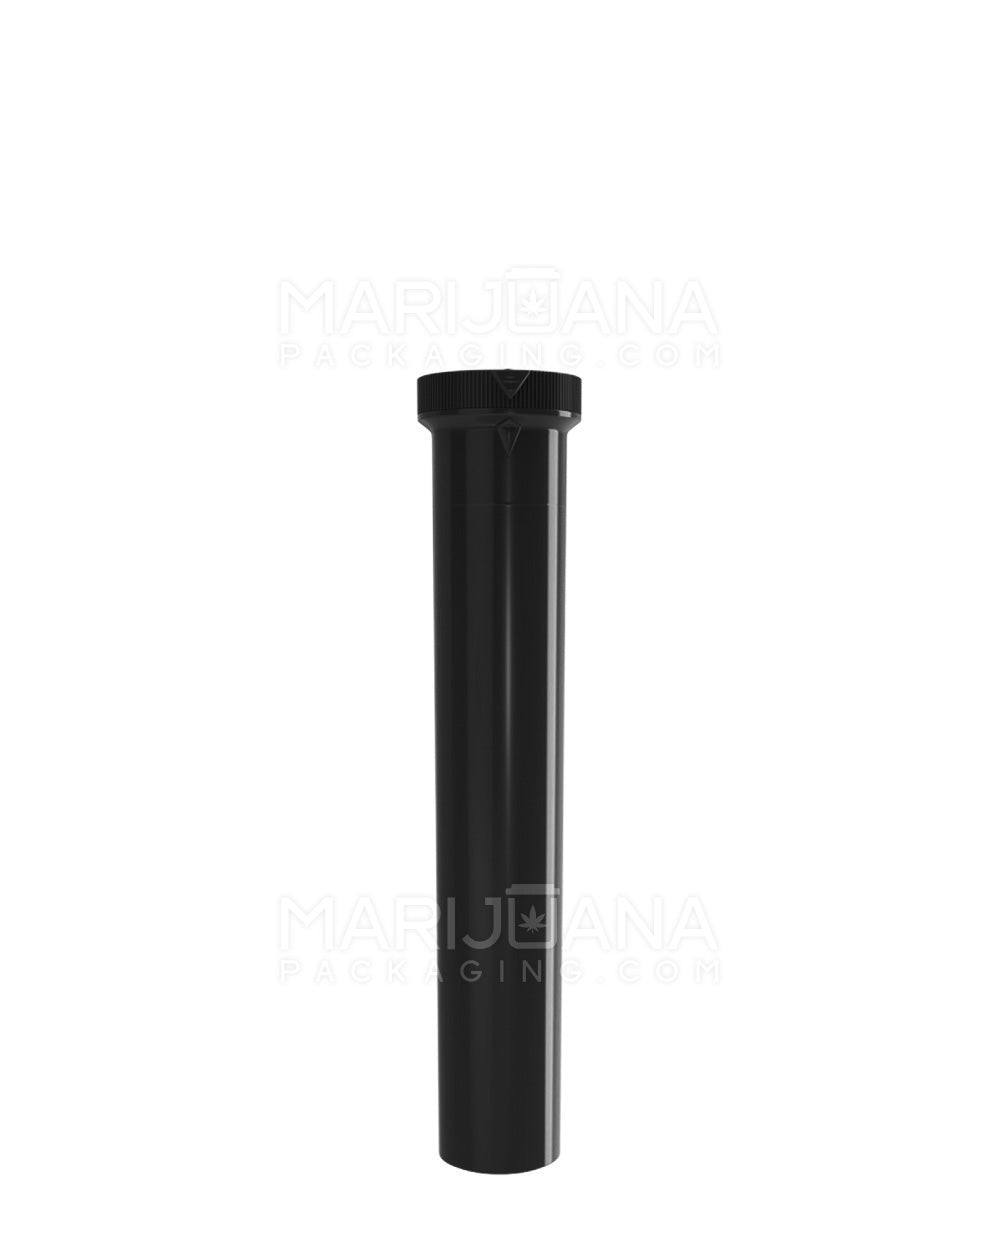 Child Resistant | ‘Line-Up Arrow’ Pre-Roll Tubes | 94mm - Opaque Black Plastic - 750 Count - 3